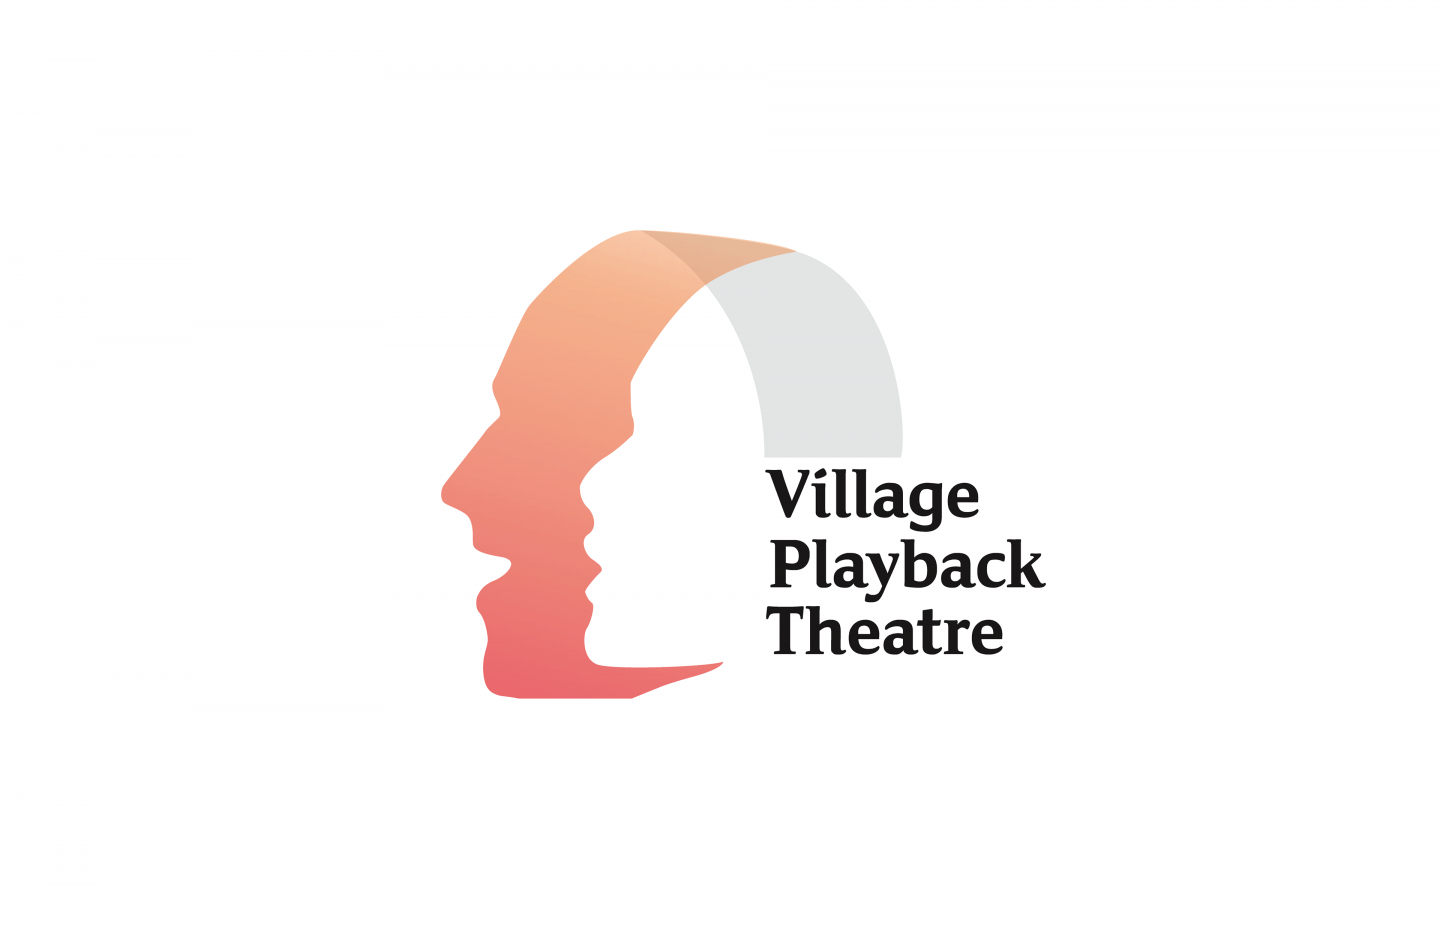 Village Playback Theatre — Rebrand